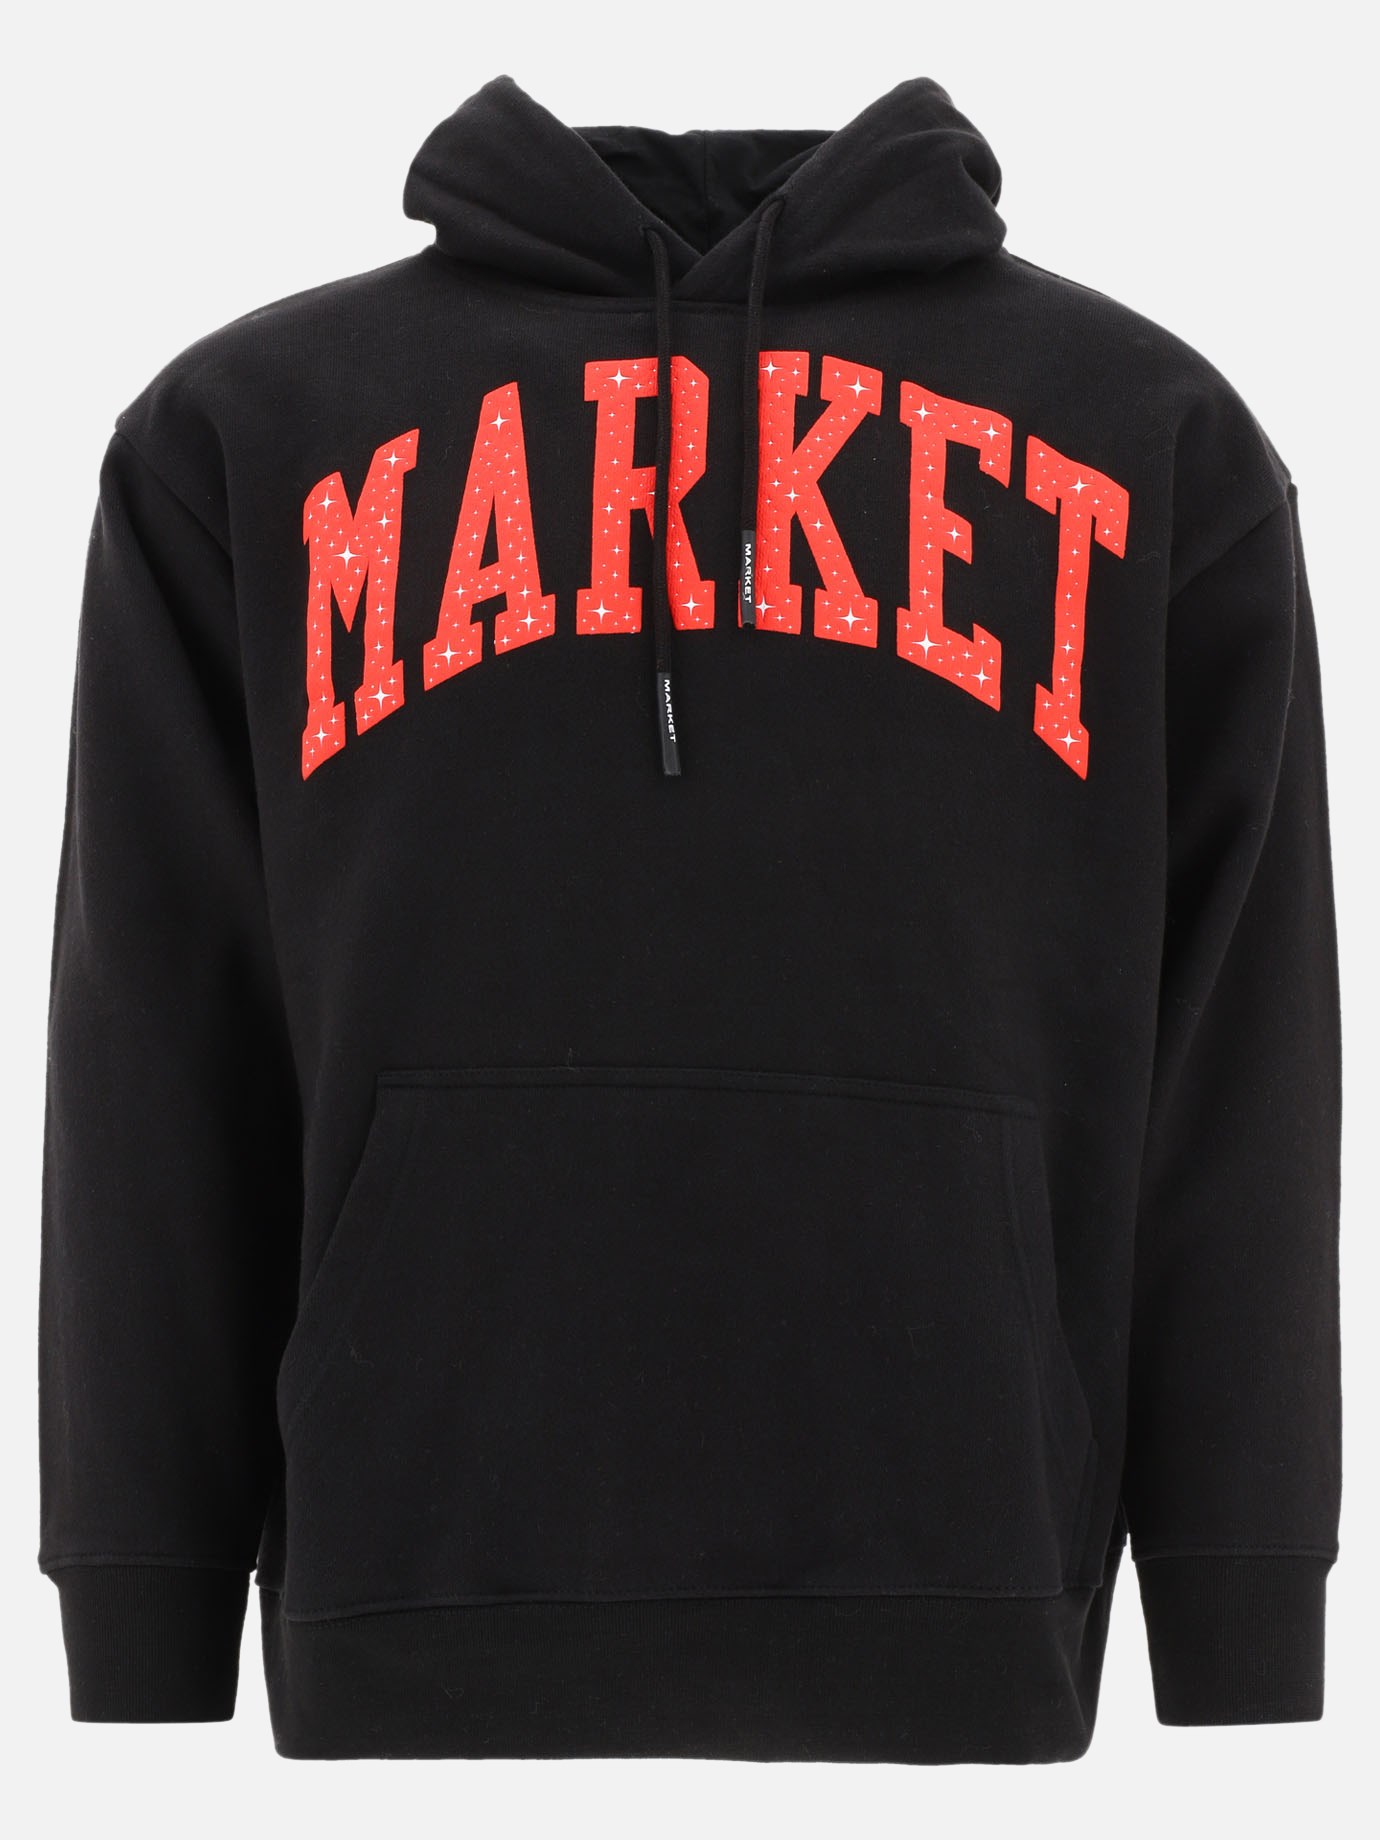  Market Arc  hoodie by Market